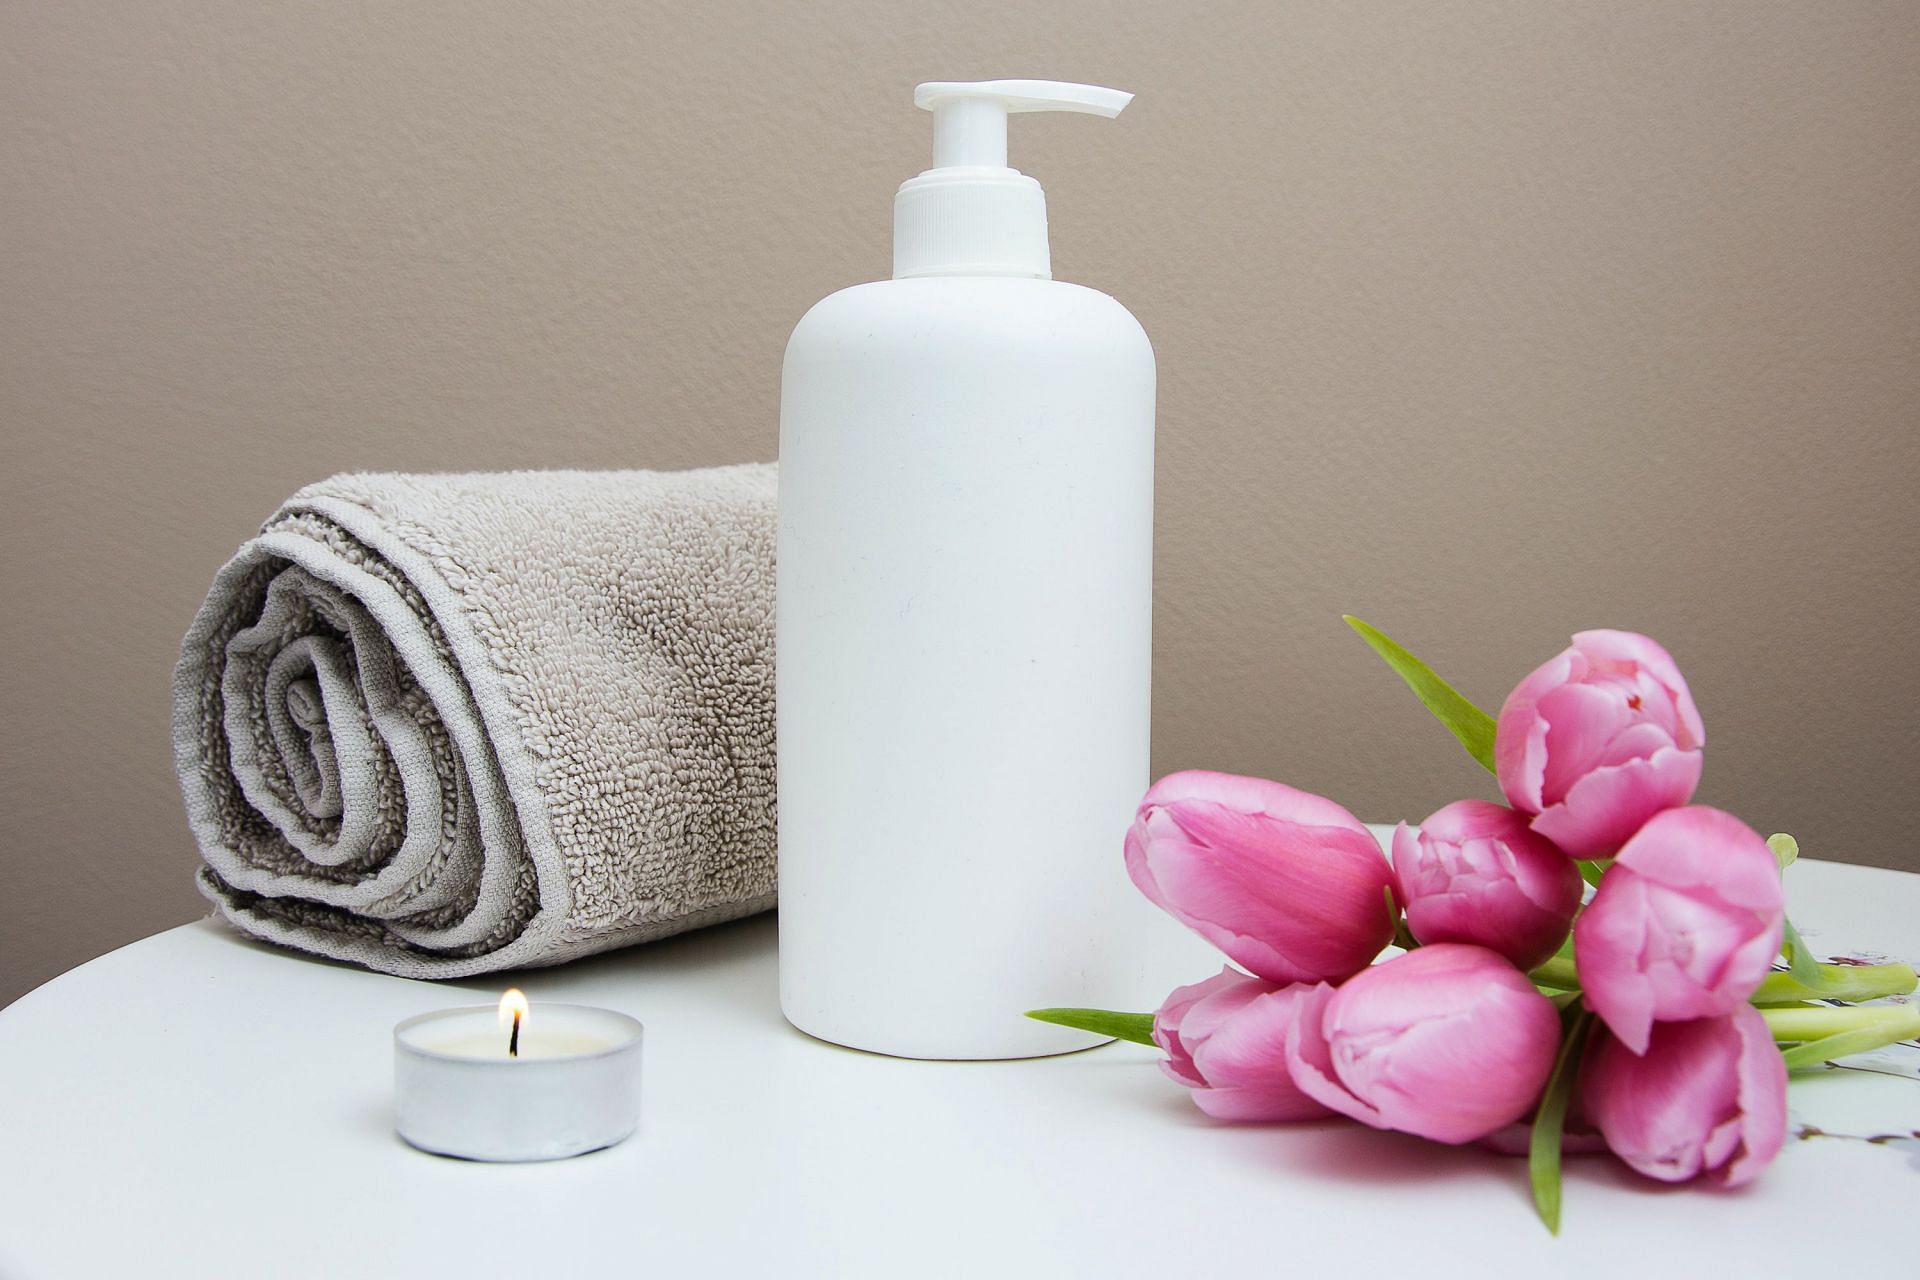 Self-care Sunday - Create your own mini spa (Image via Unsplash/Camille Brodard)